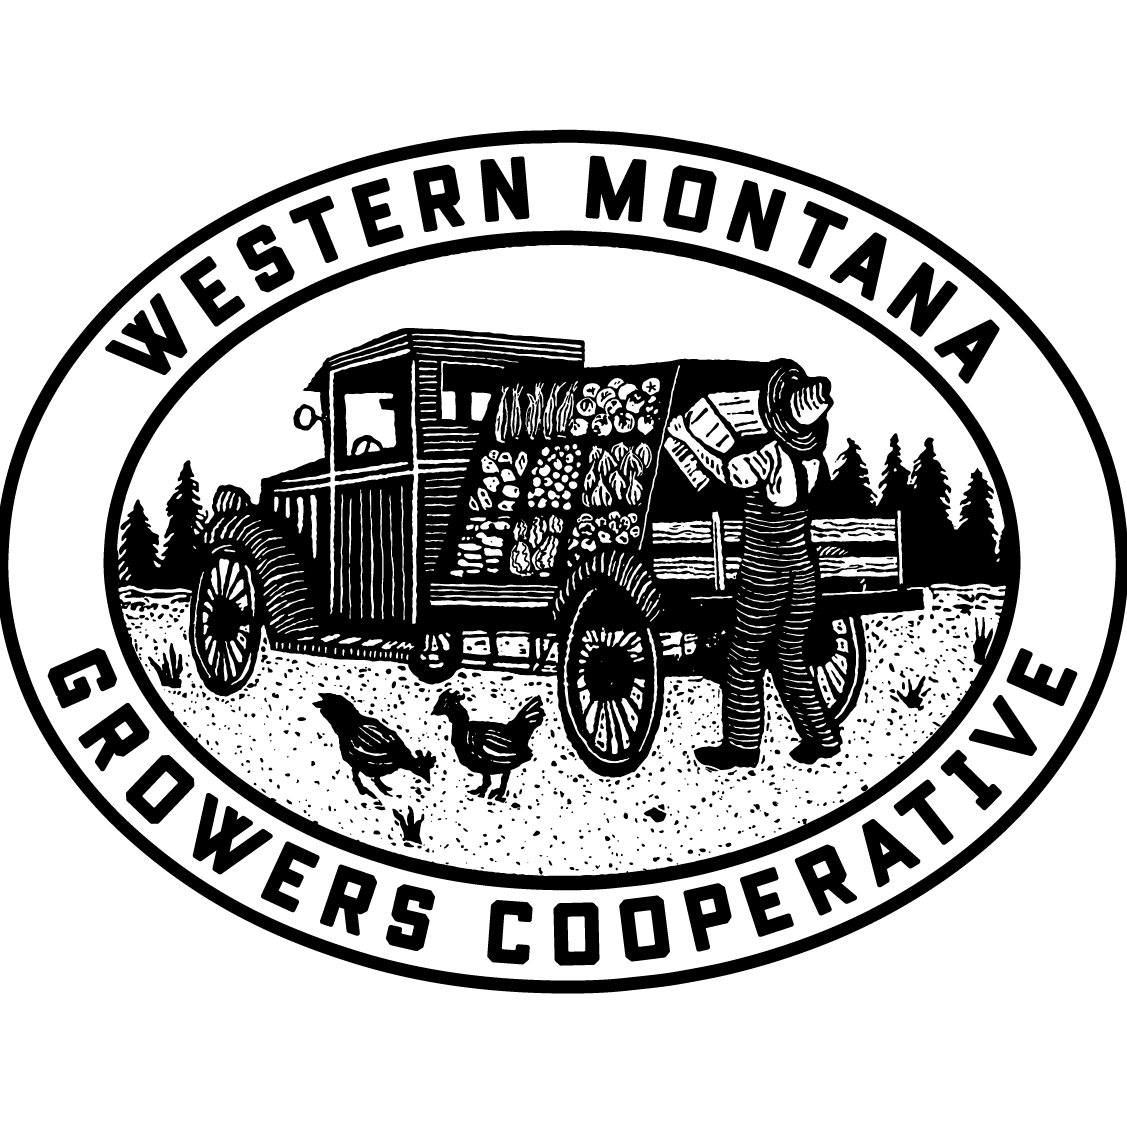 Western Montana Growers Coop